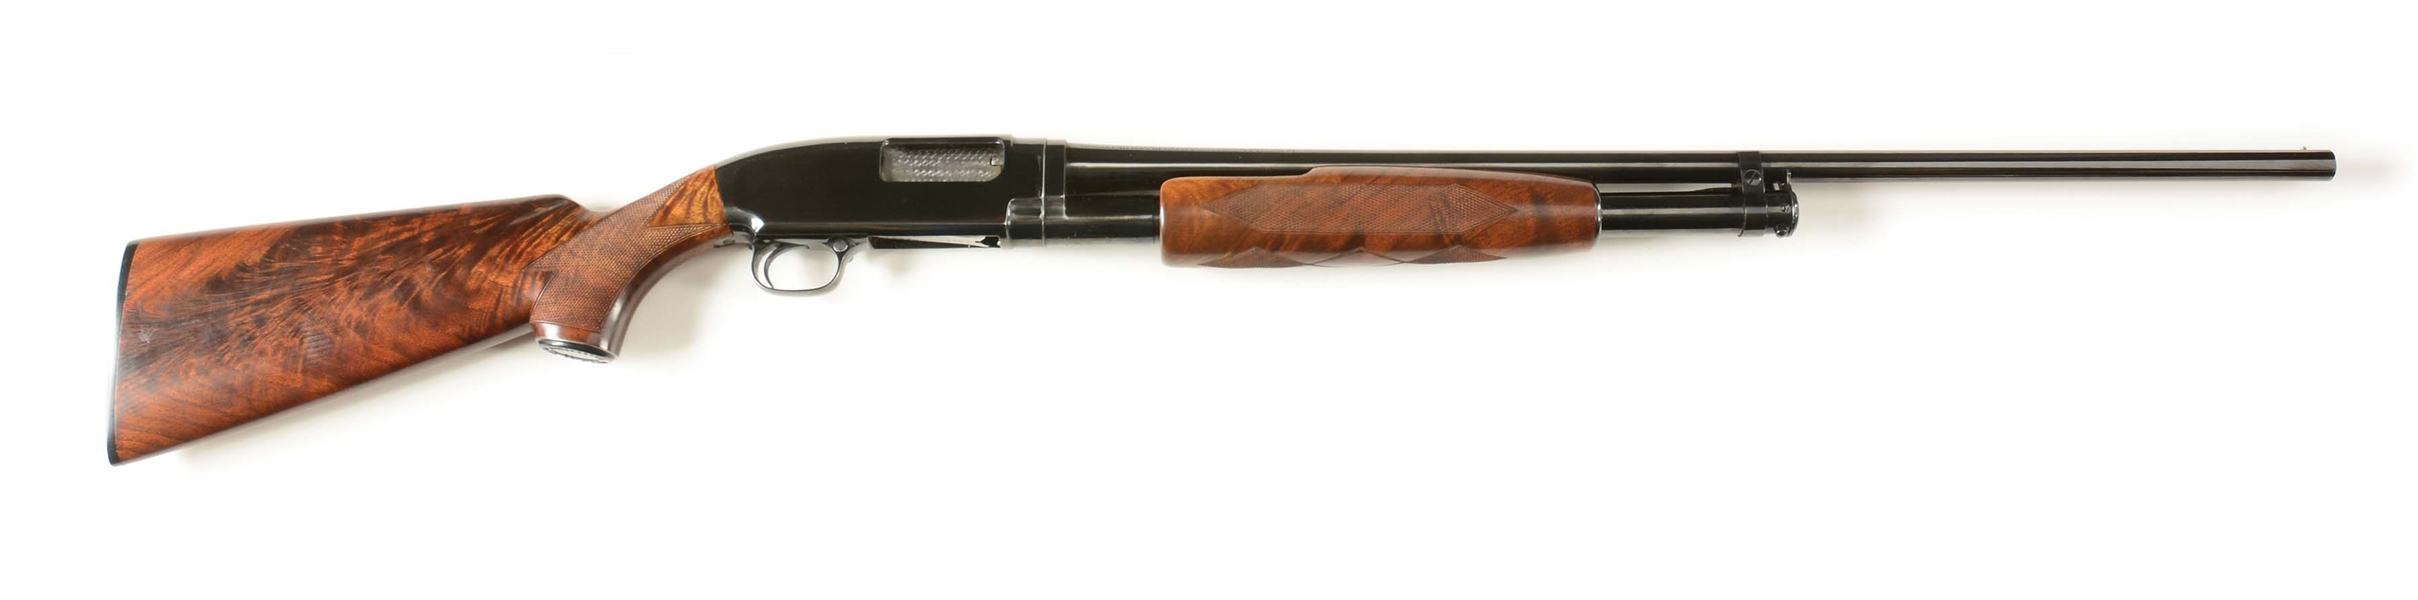 (C) HANDSOME WINCHESTER MODEL 12 PUMP 20 GAUGE PIGEON UPGRADE SHOTGUN (1937).